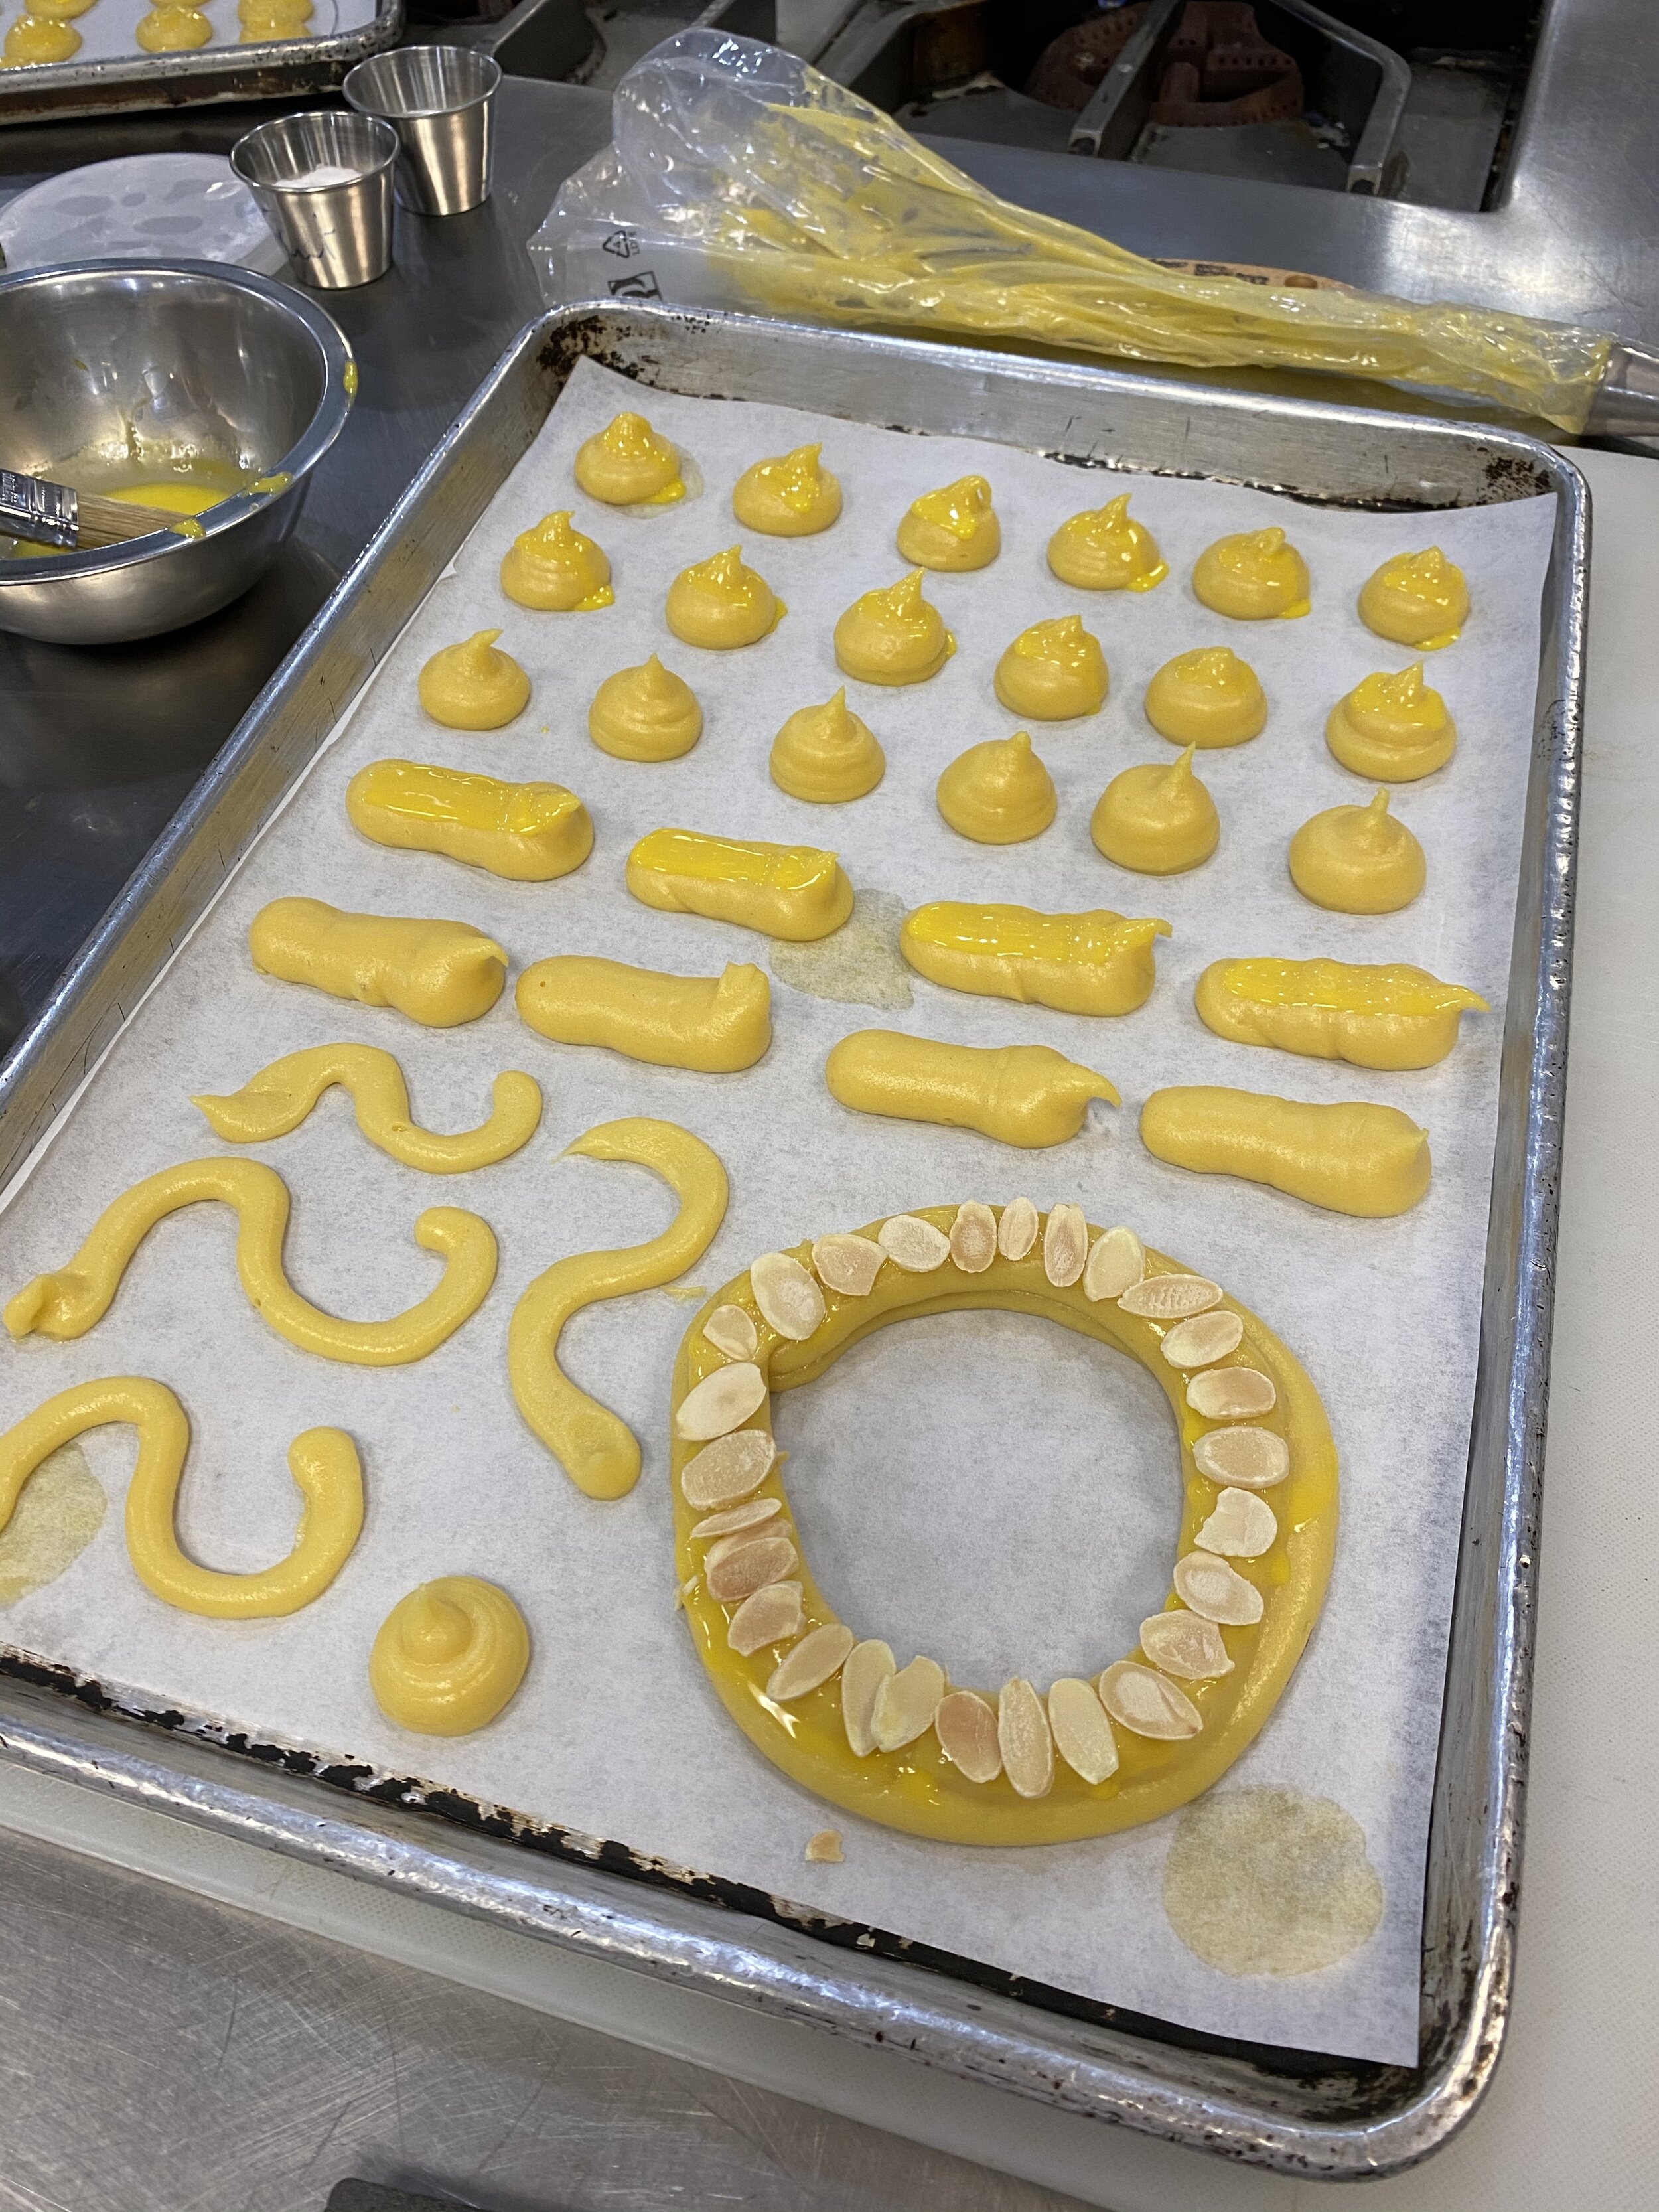 Pâte Feuilletée (Puff Pastry) - Artisanal Touch Kitchen